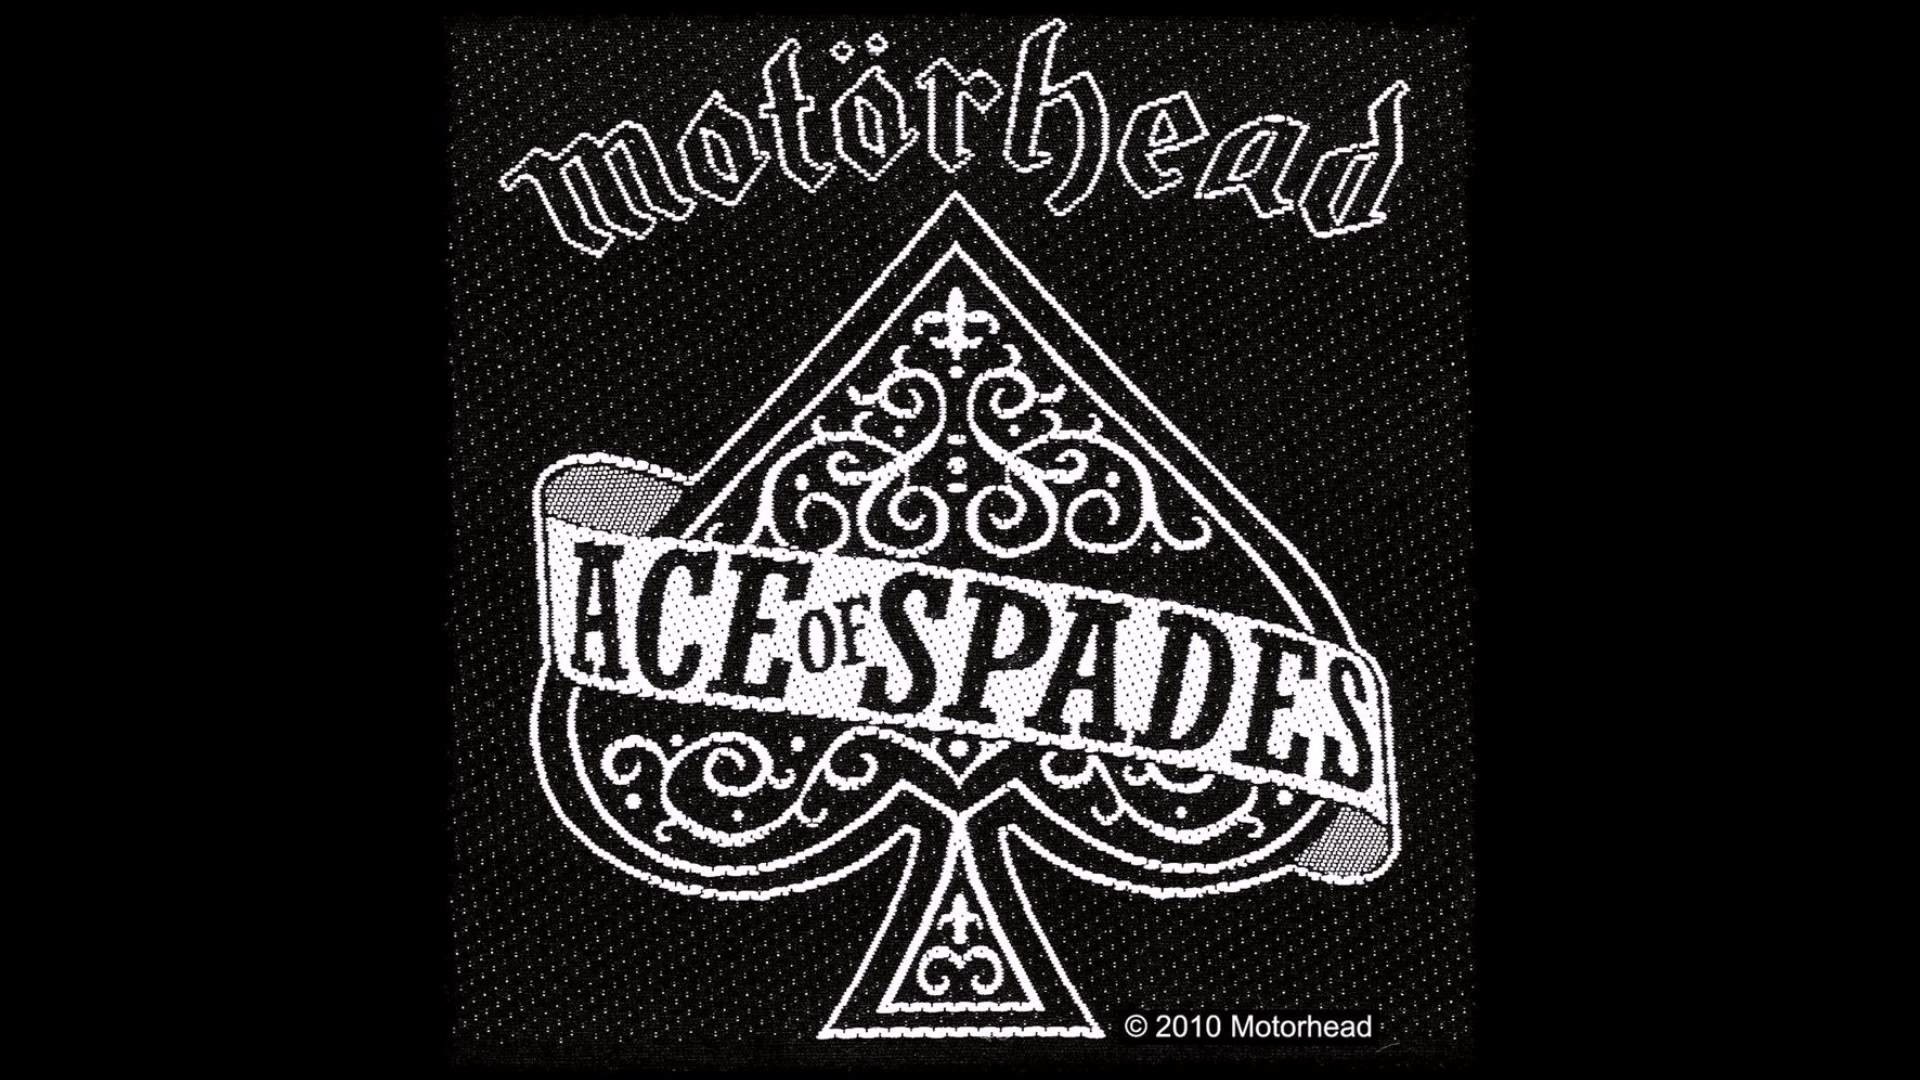 Ace of spades â motorhead guitar cover